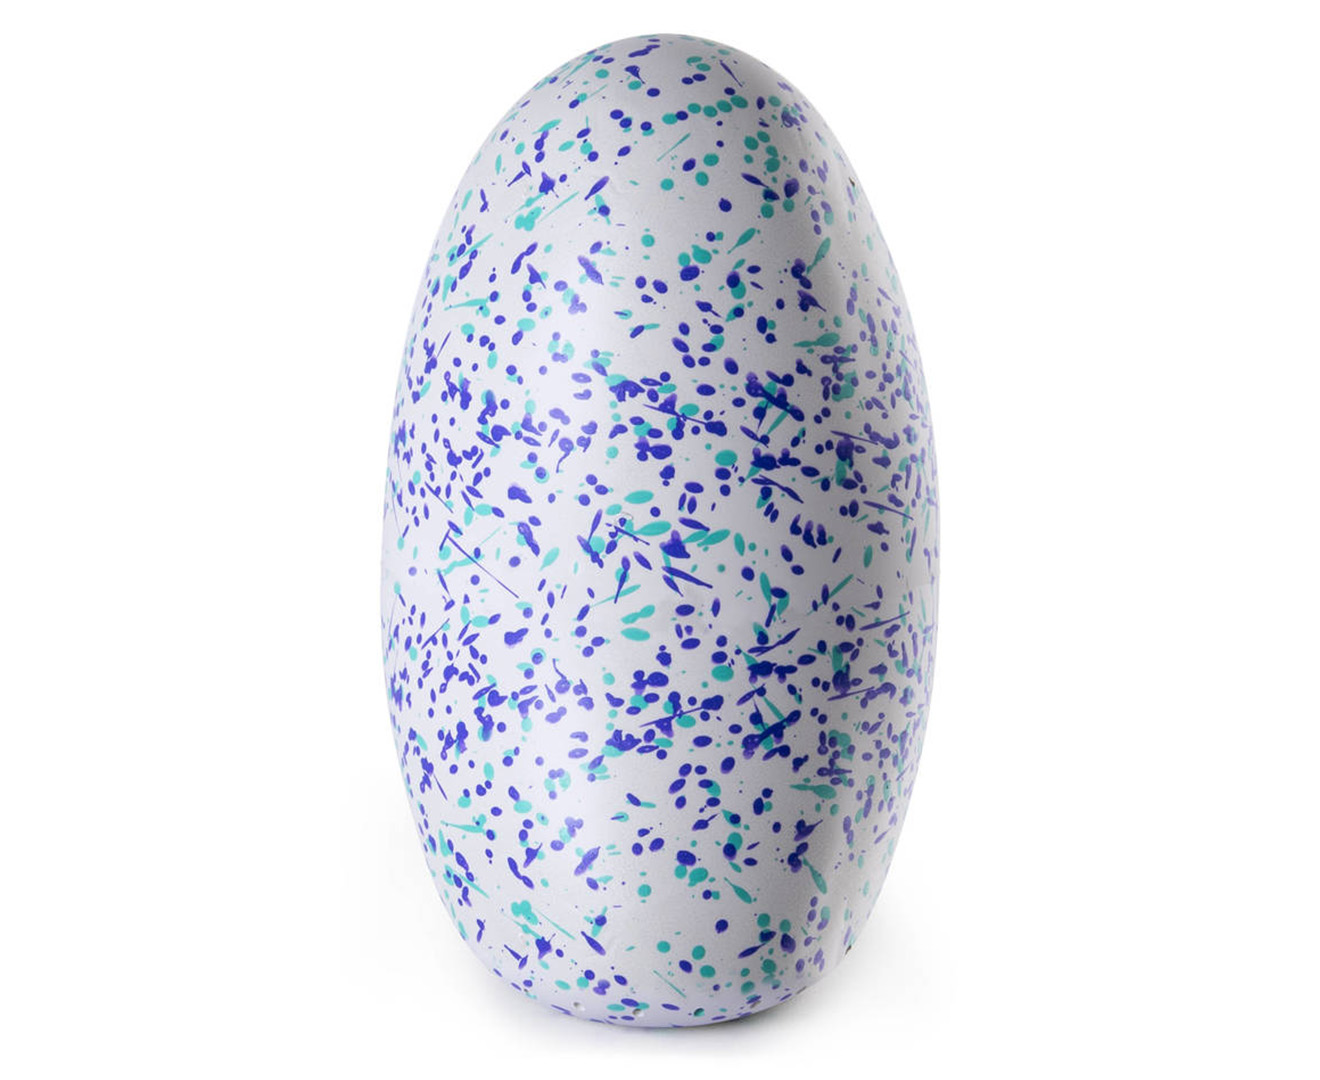 Hatchimals Surprise Peacat Egg - Purple/Teal | eBay